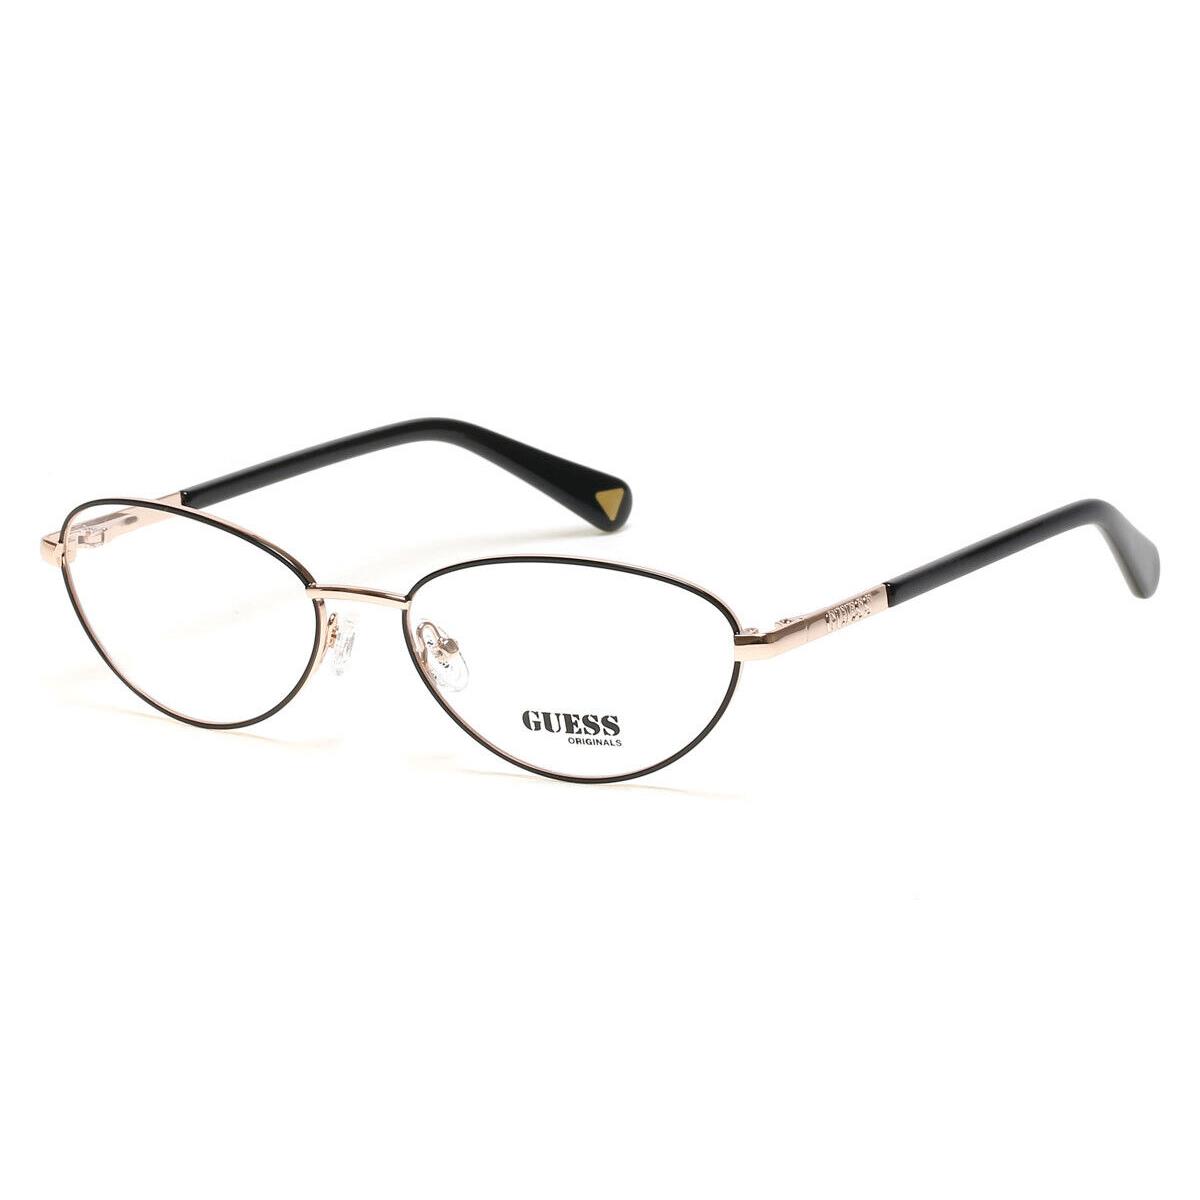 Guess GU8238 033 Gold and Black Plastic Optical Eyeglasses Frame 55-16-140 8238